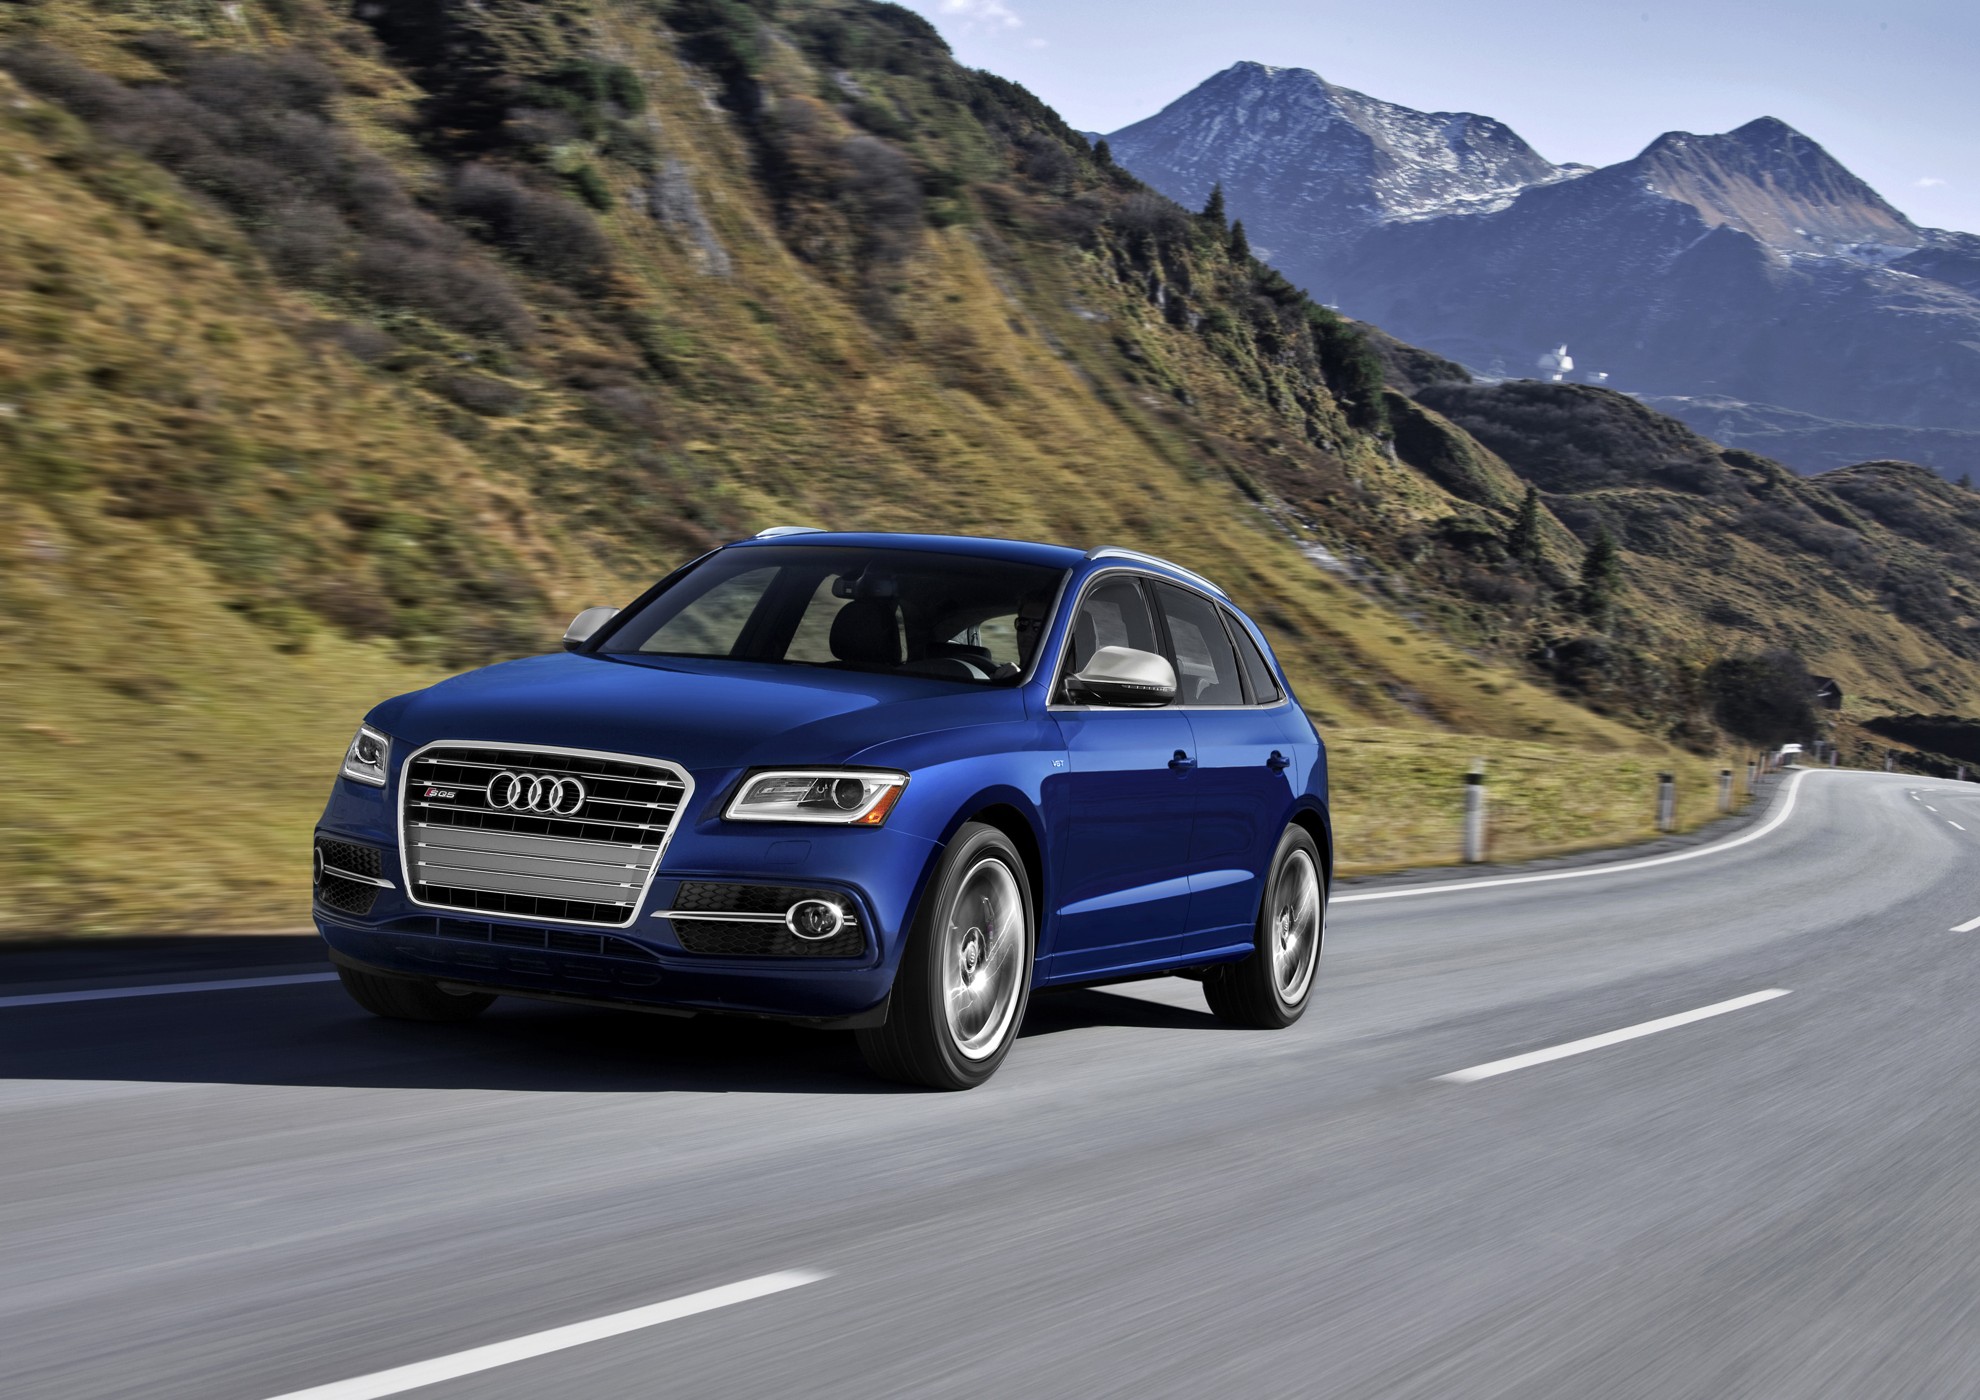 Audi Car Sales: around 1,455,100 deliveries in 2012